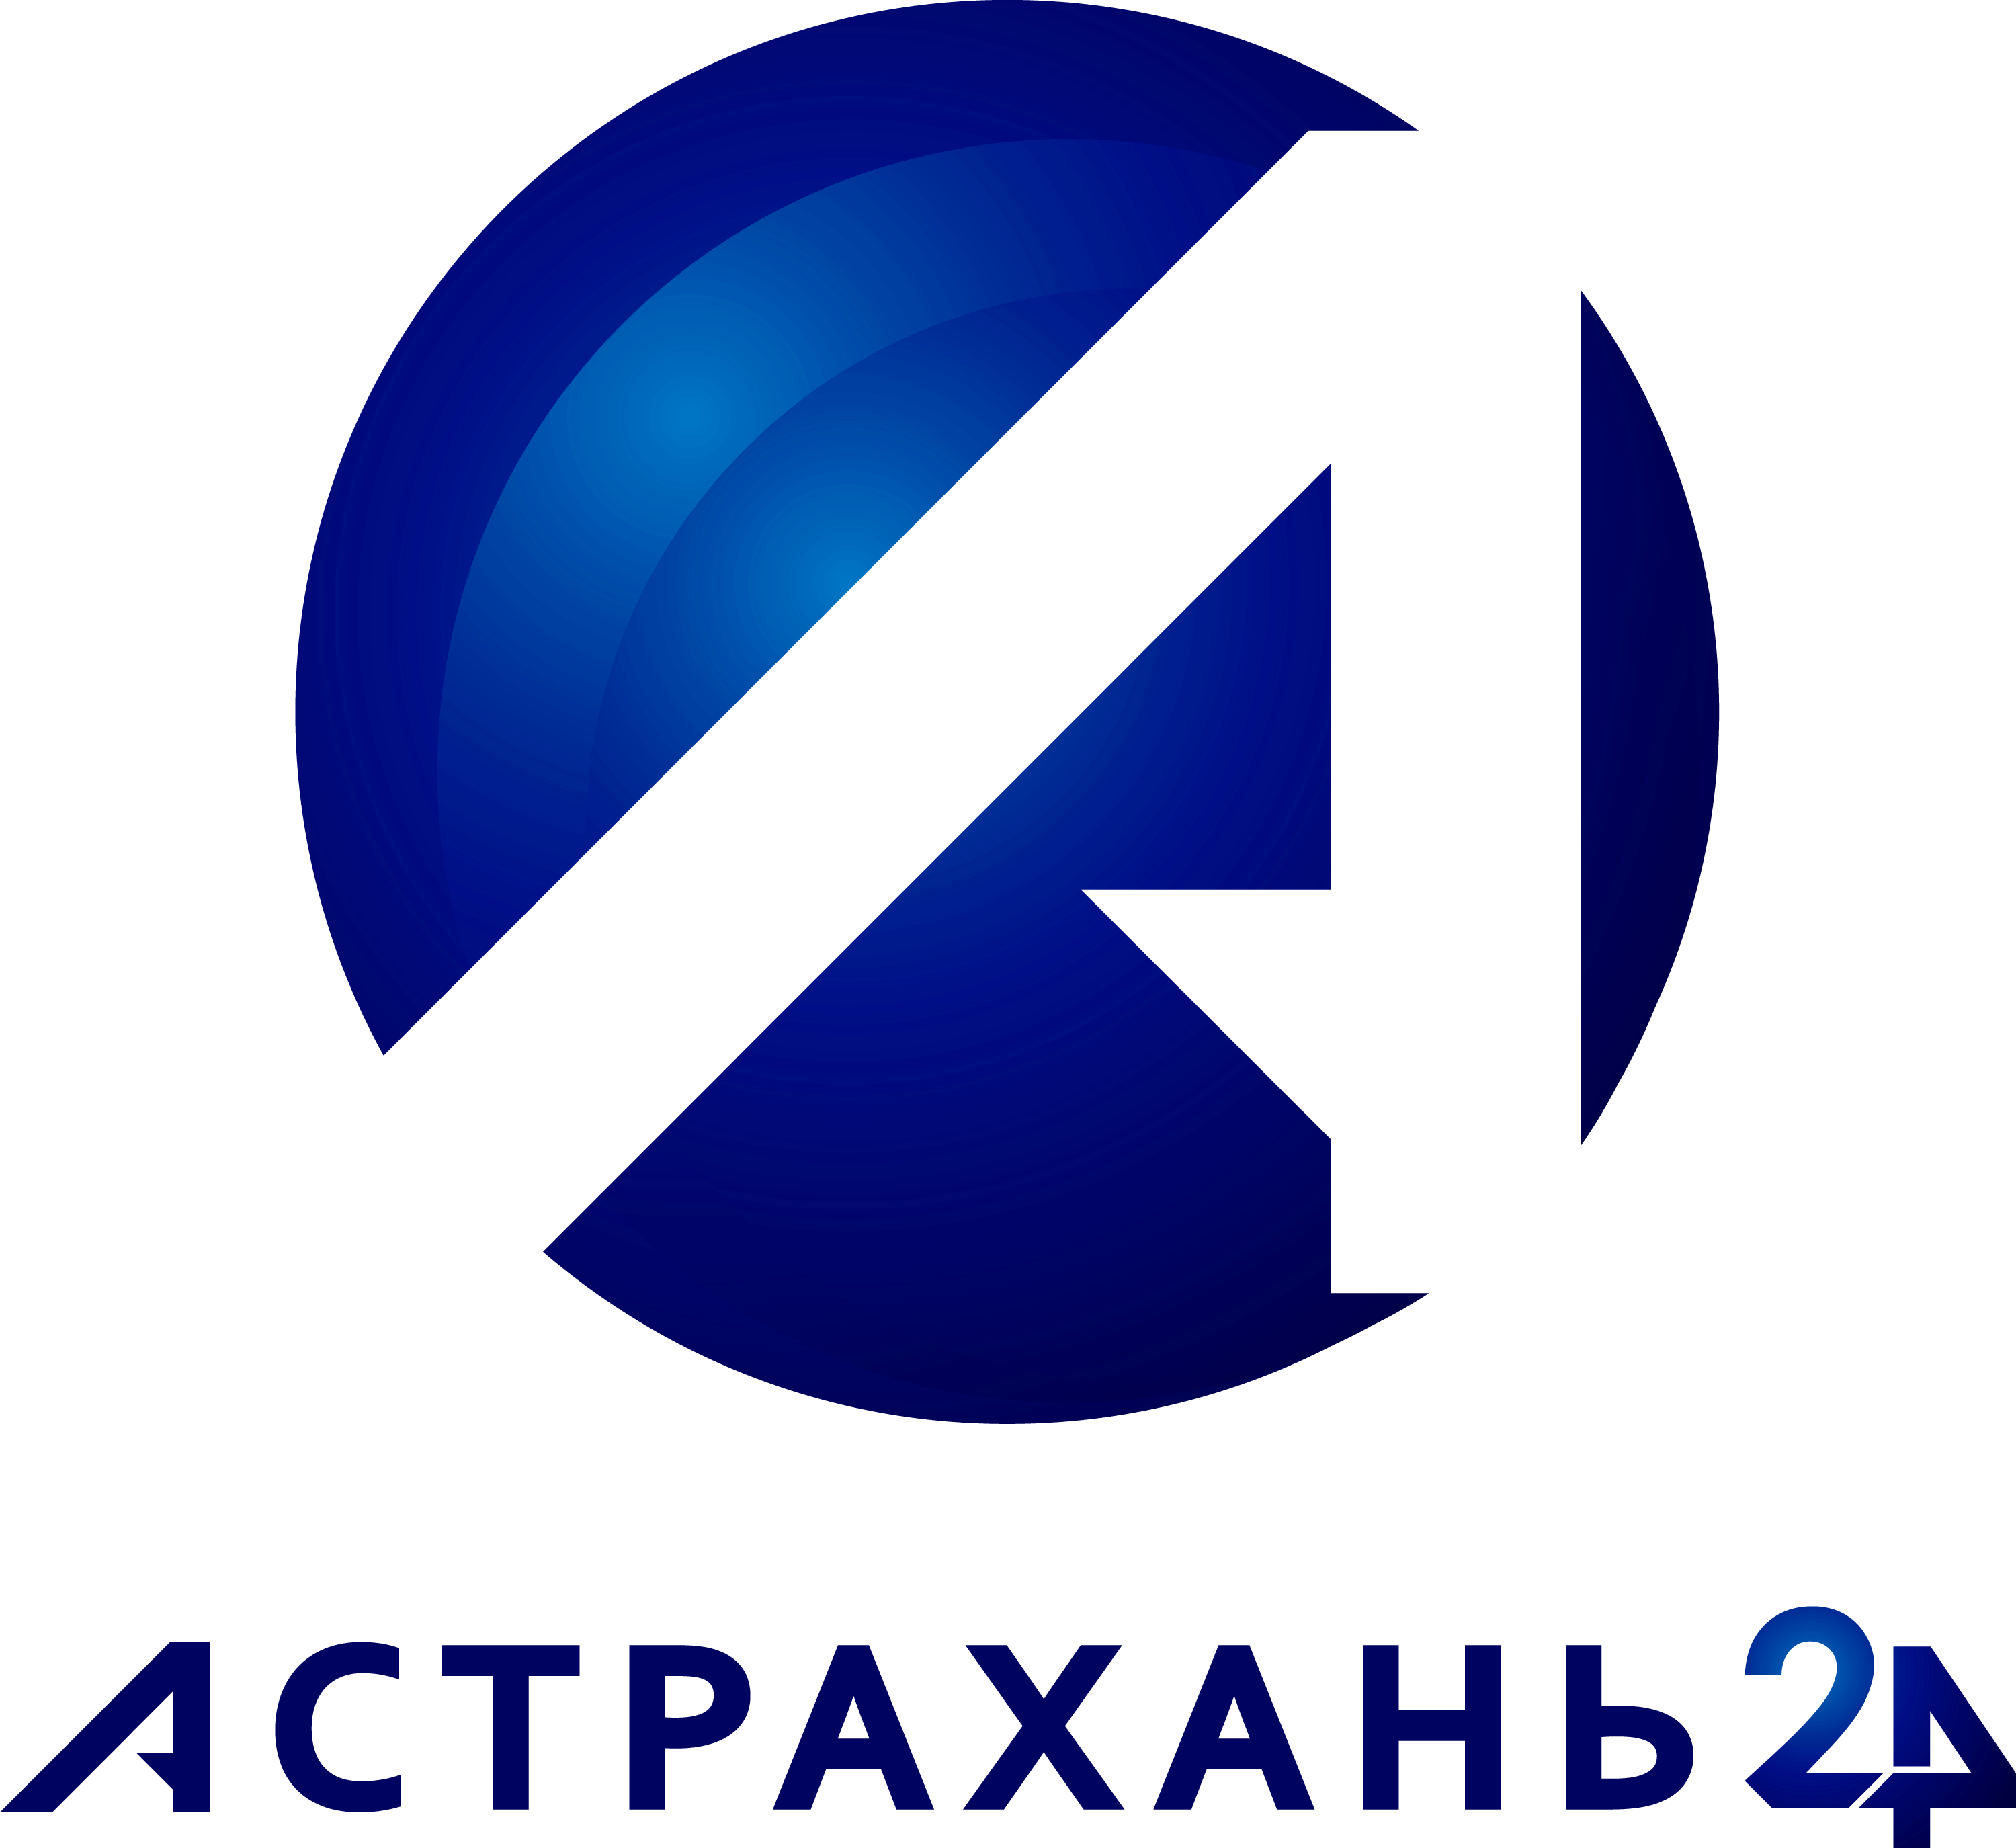 Астрахань 24 logo. Логотип канала Астрахань 24 HD. Телевидение логотип. Эмблема Астраханского ТВ.